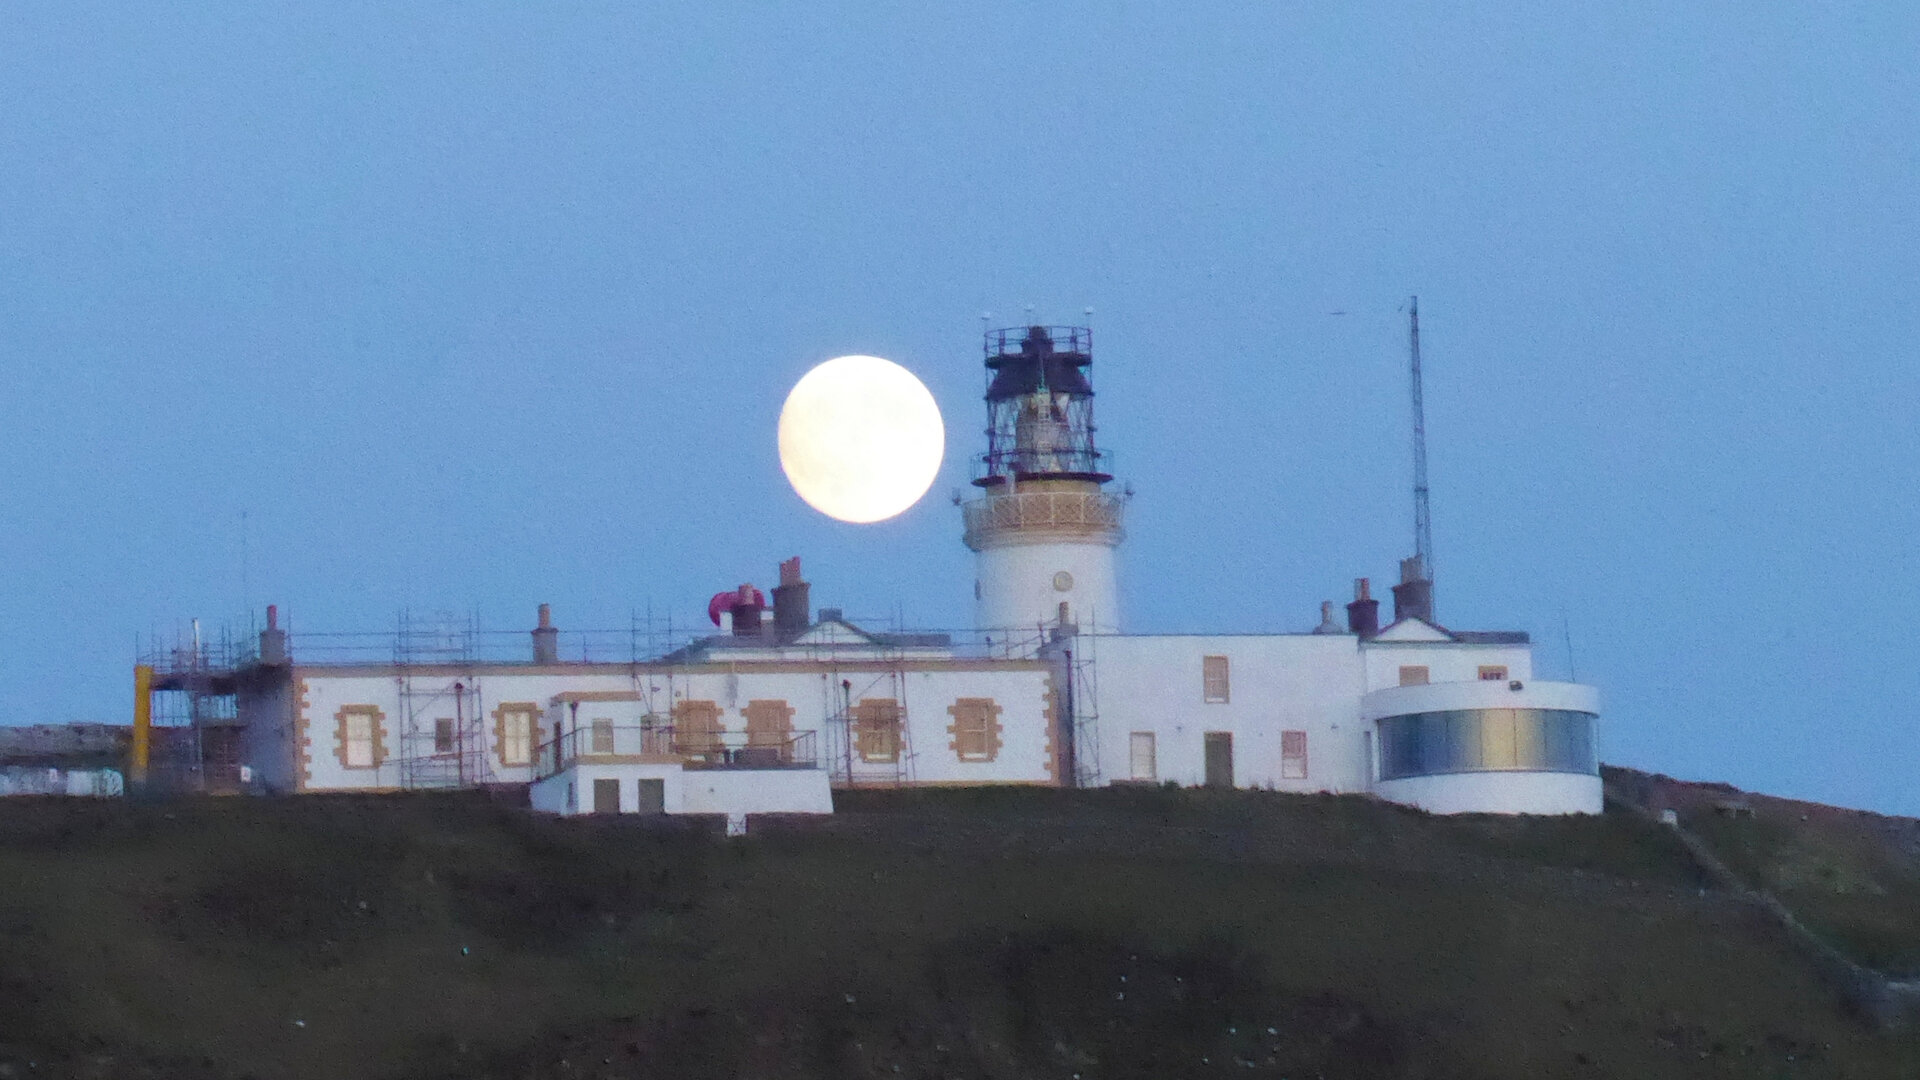 The lighthouse at Sumburgh Head at dusk.